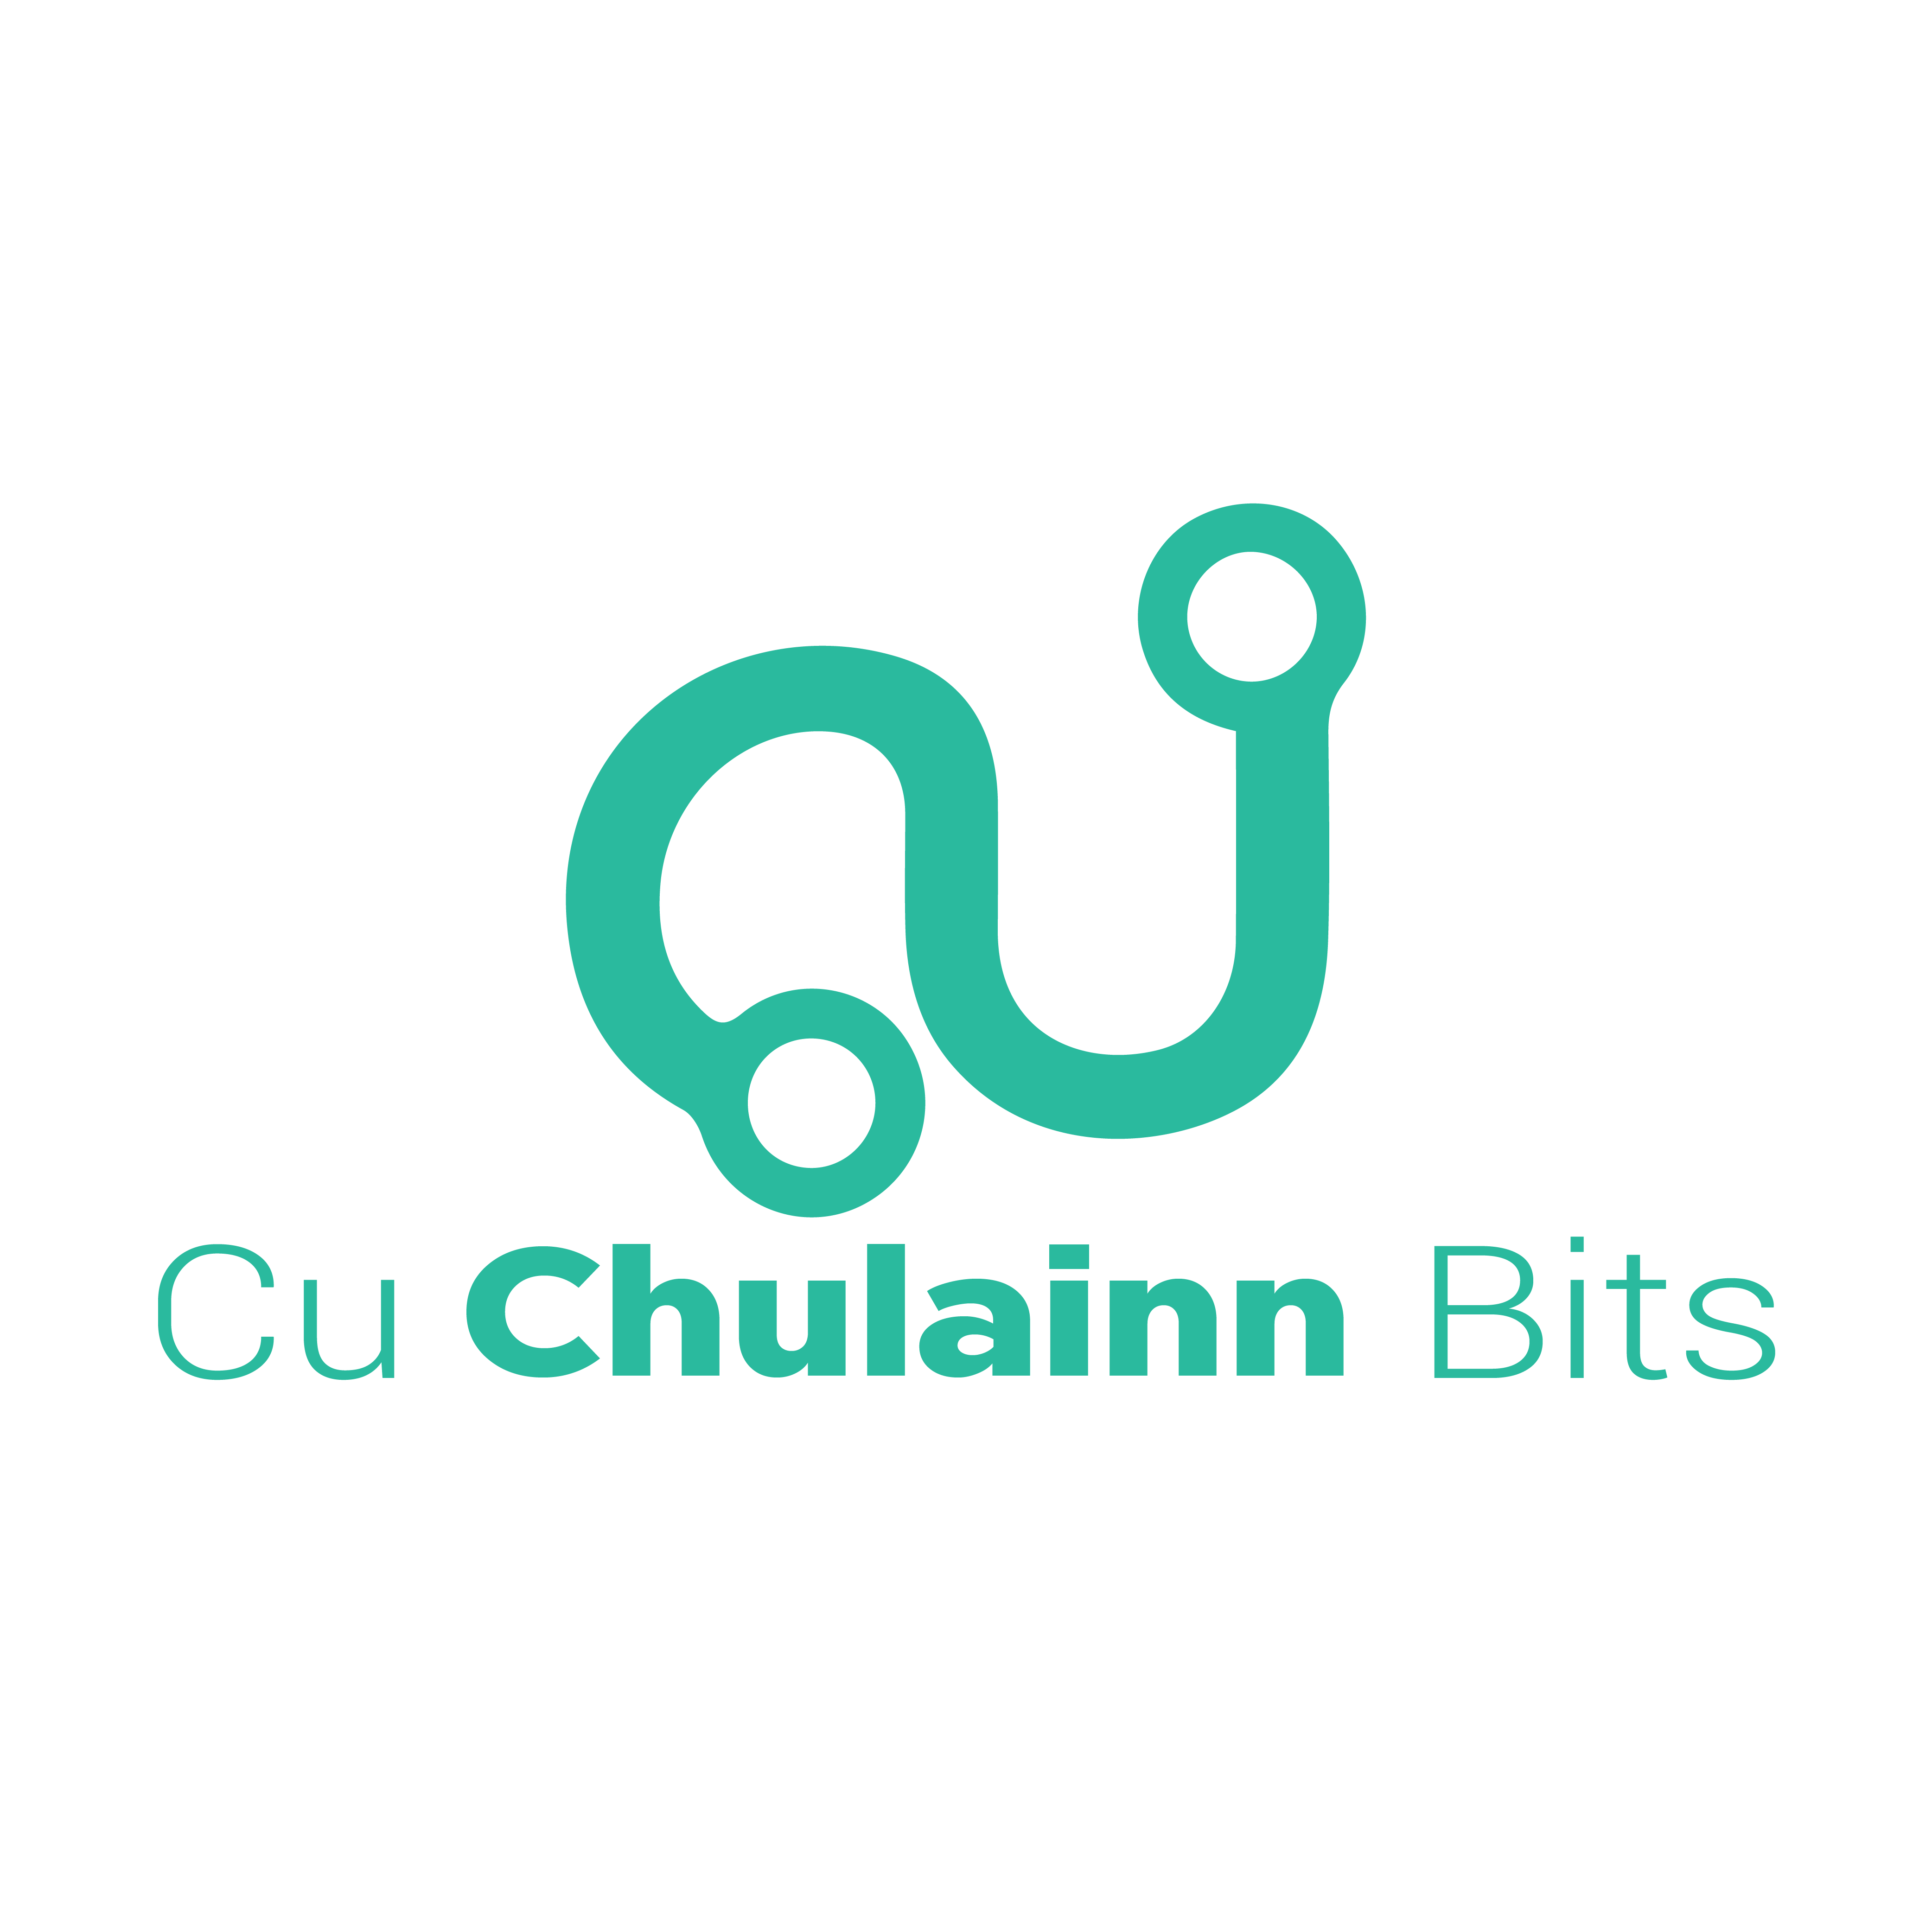 Cu Chulainn Bits Limited